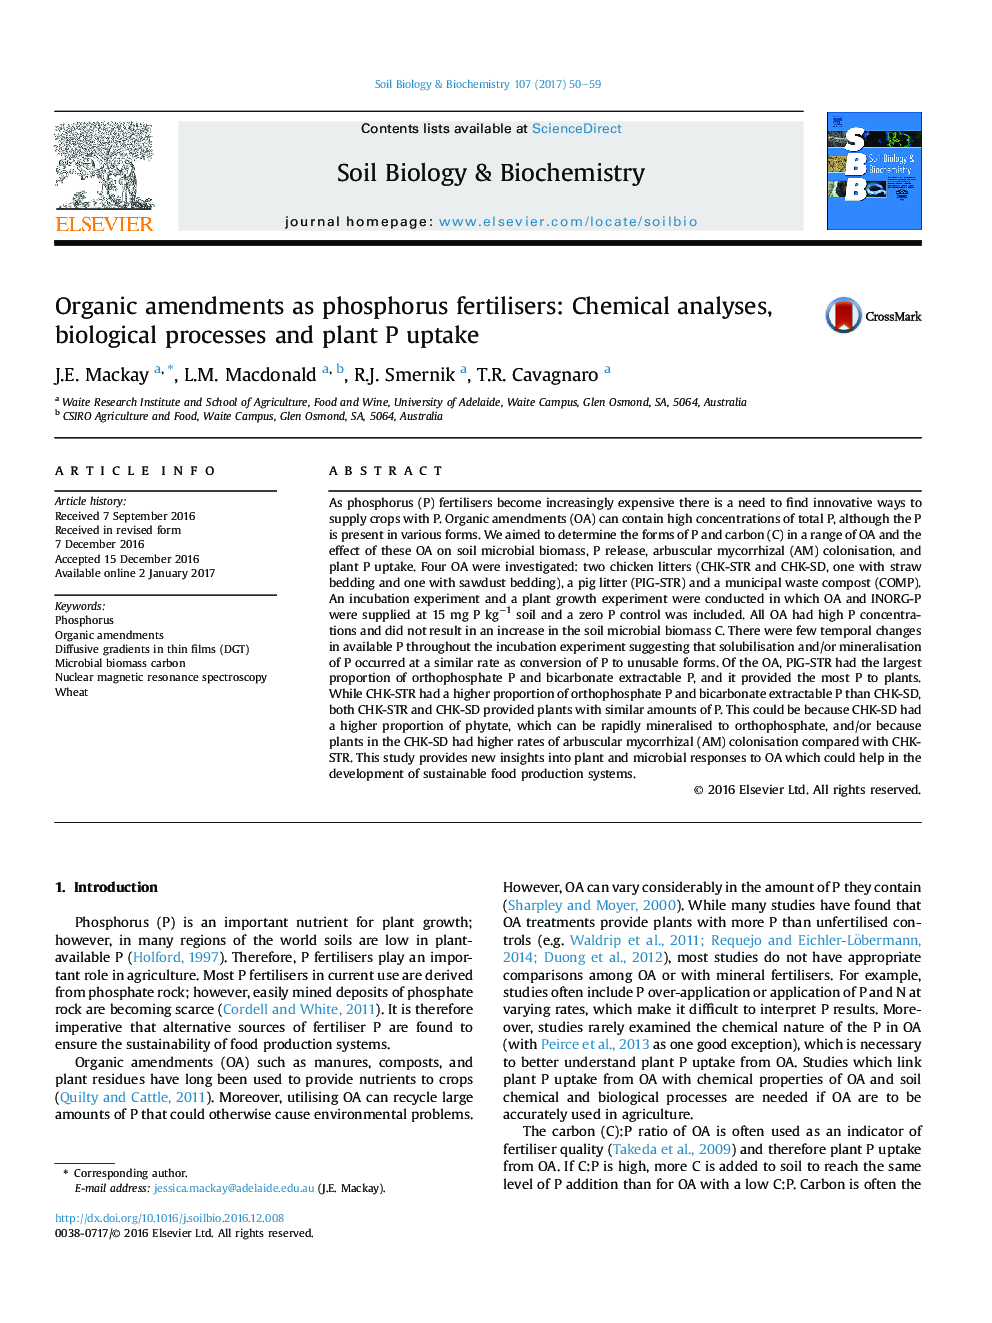 Organic amendments as phosphorus fertilisers: Chemical analyses, biological processes and plant P uptake